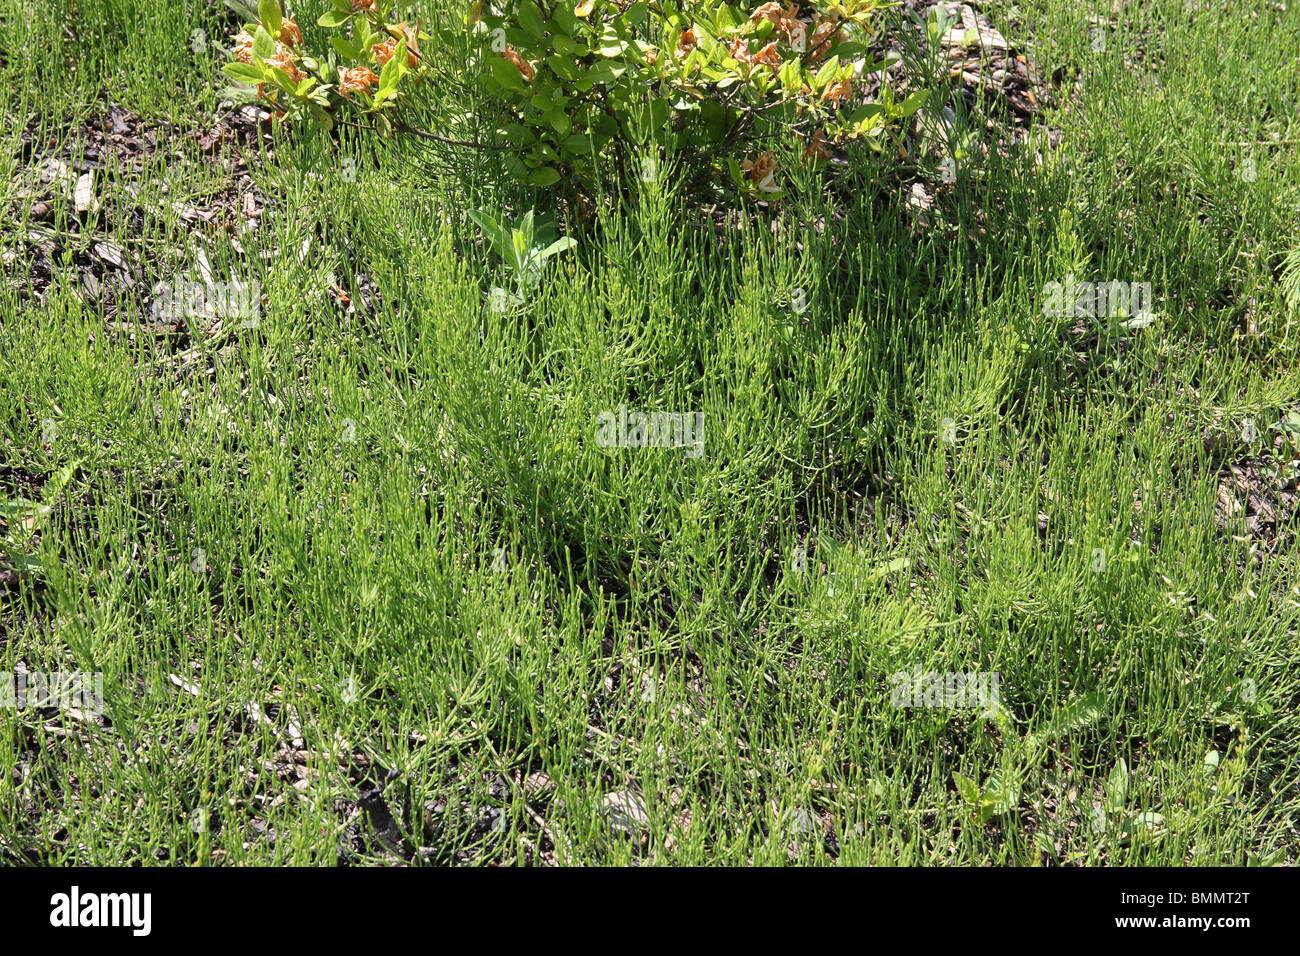 Equiseto o cola de caballo (Equisetum arvense) es muy arraigadas y difíciles de erradicar Foto de stock